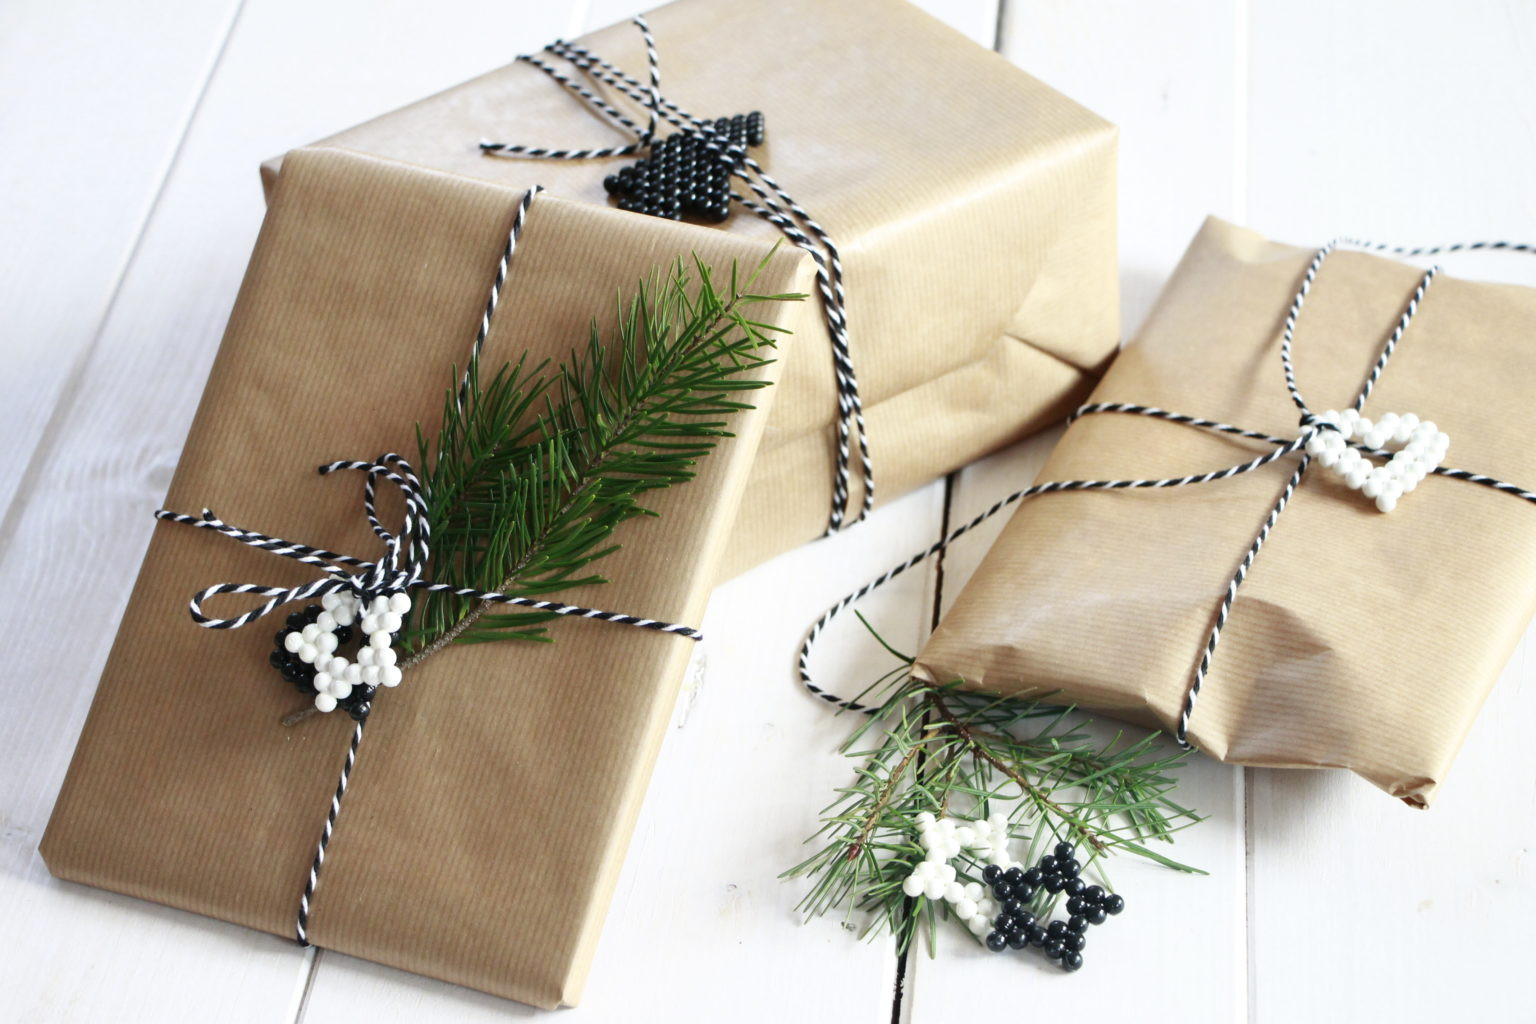 Geschenke Verpacken Anleitung
 Weihnachtsgeschenke verpacken Ideen mit Aquabeads